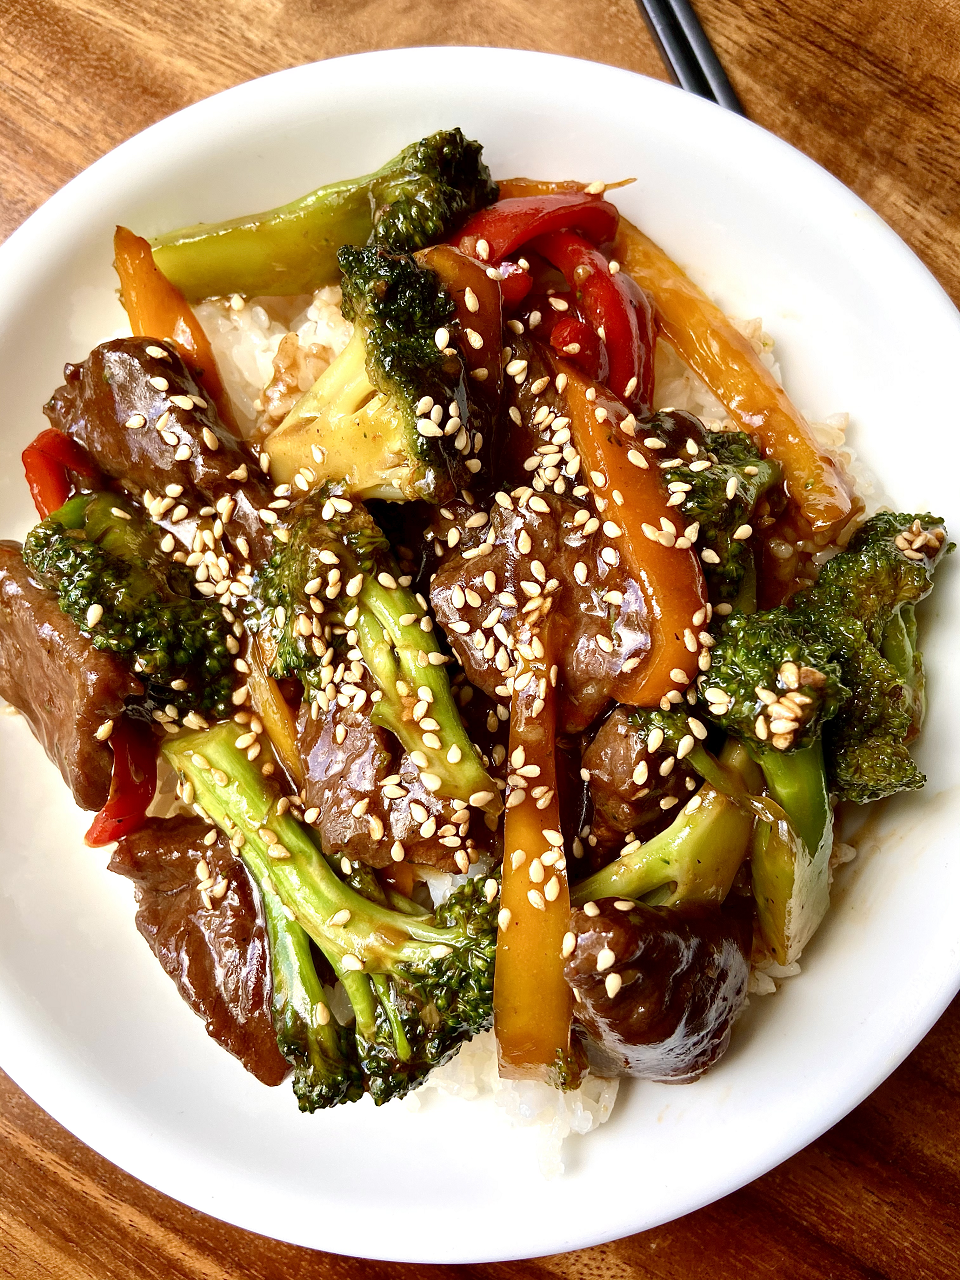 Beef and Broccoli Stir Fry With Sesame Seeds